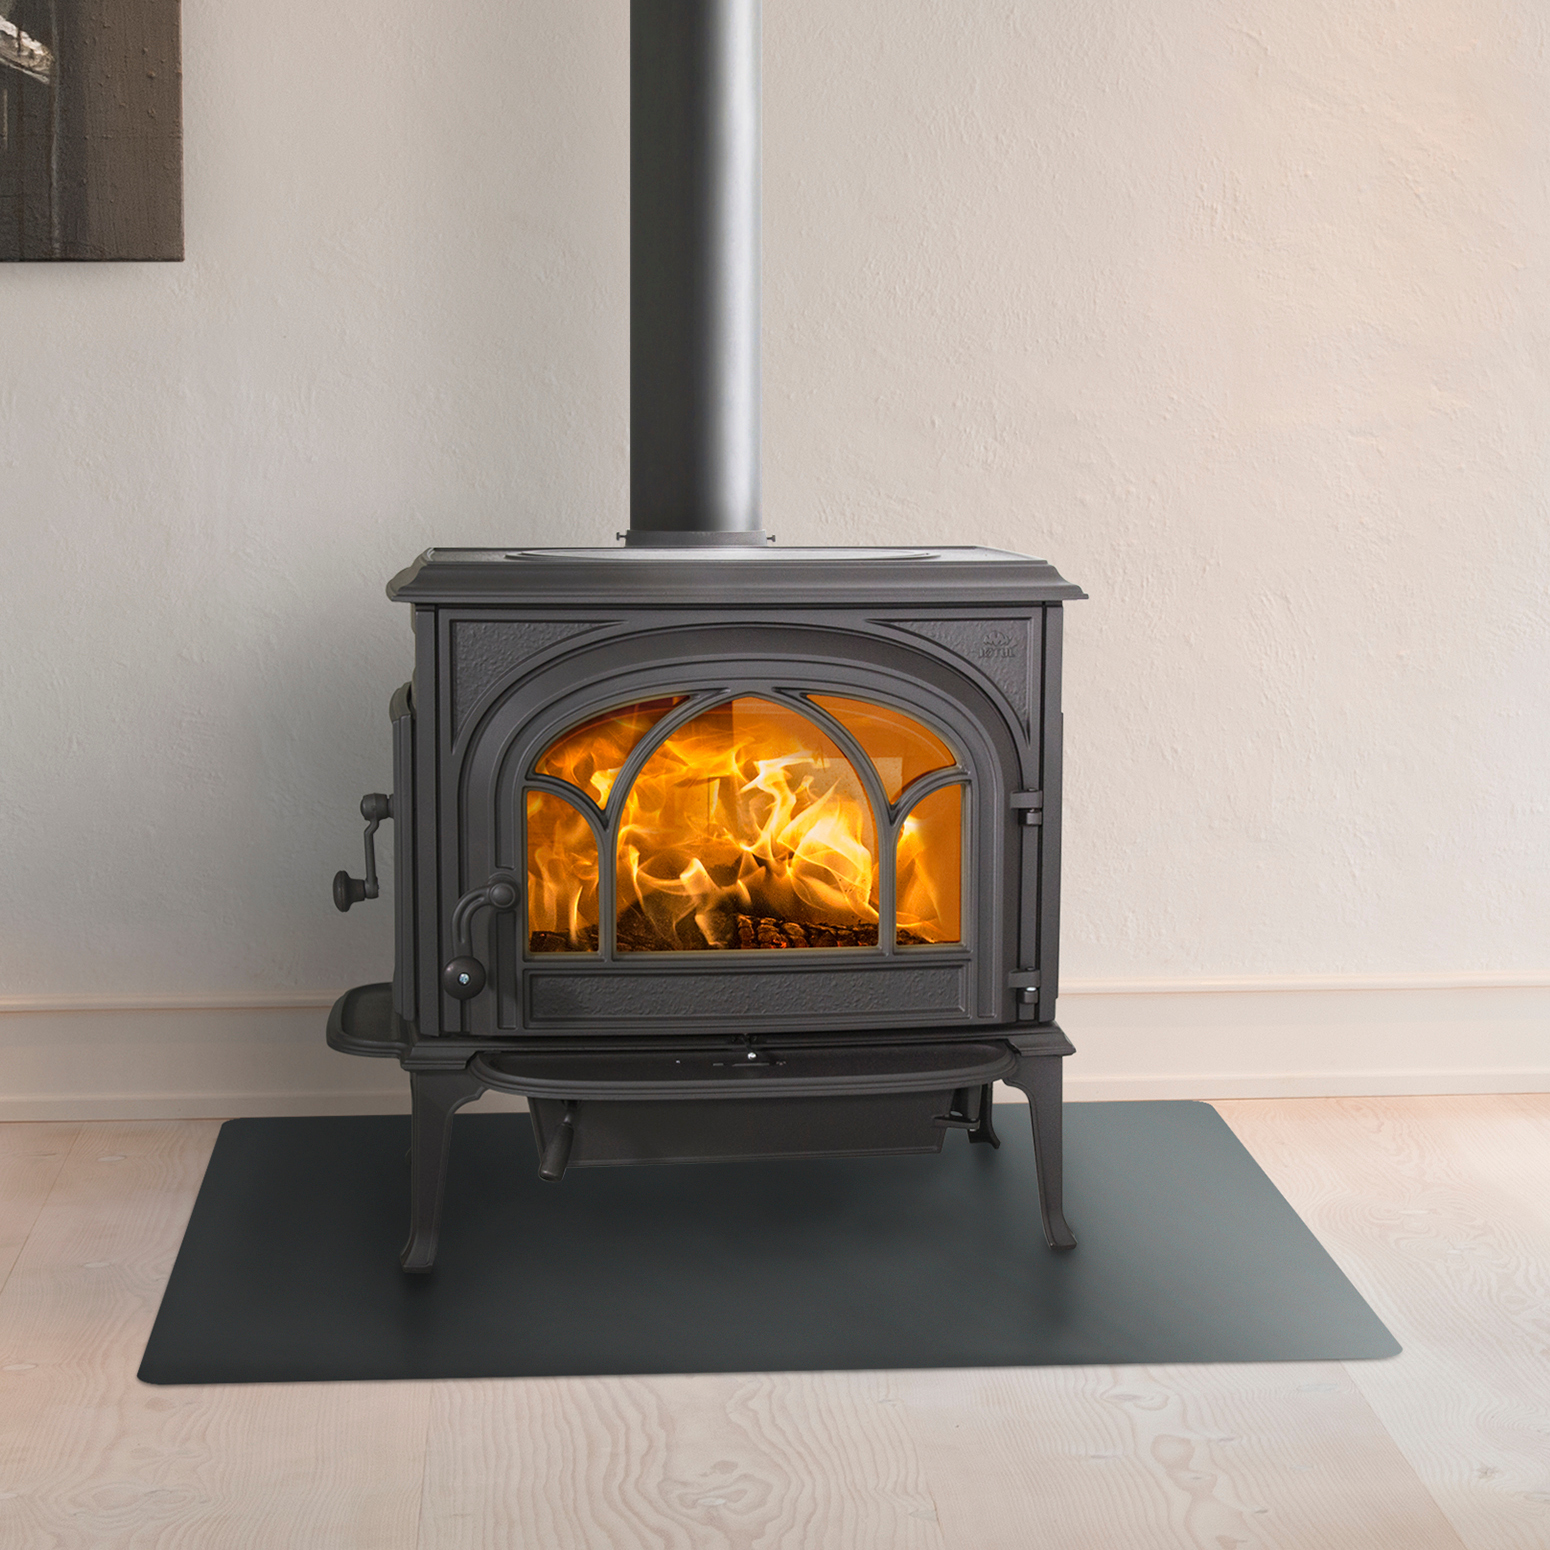 Jotul F500 wood burning stove in black paint